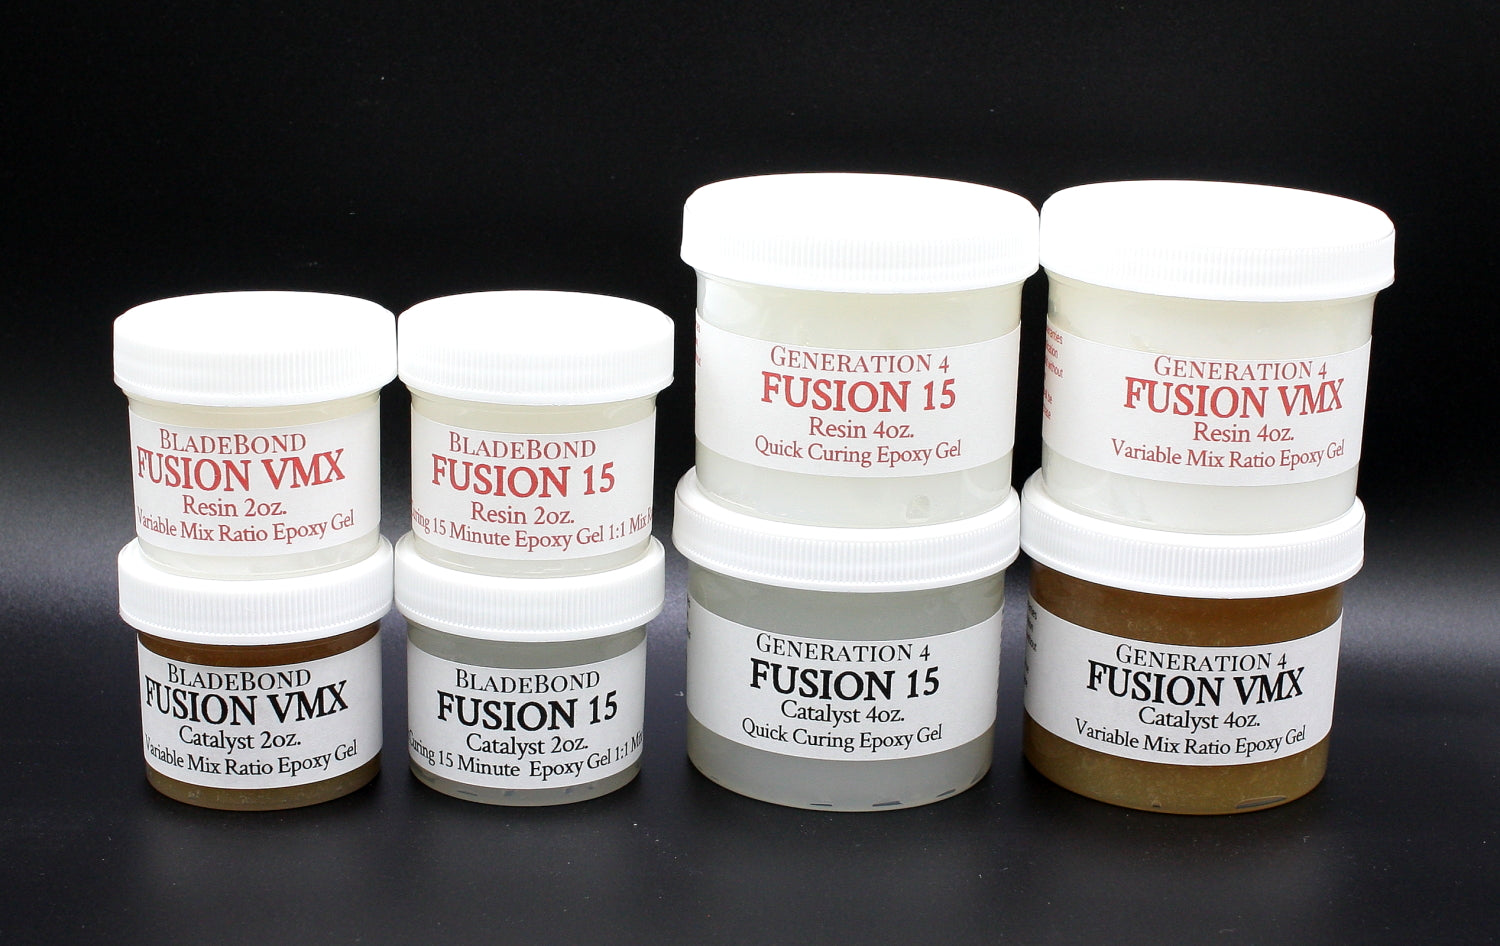 Buy Fusion 15 from Generation 4 at Hogman's custom rods